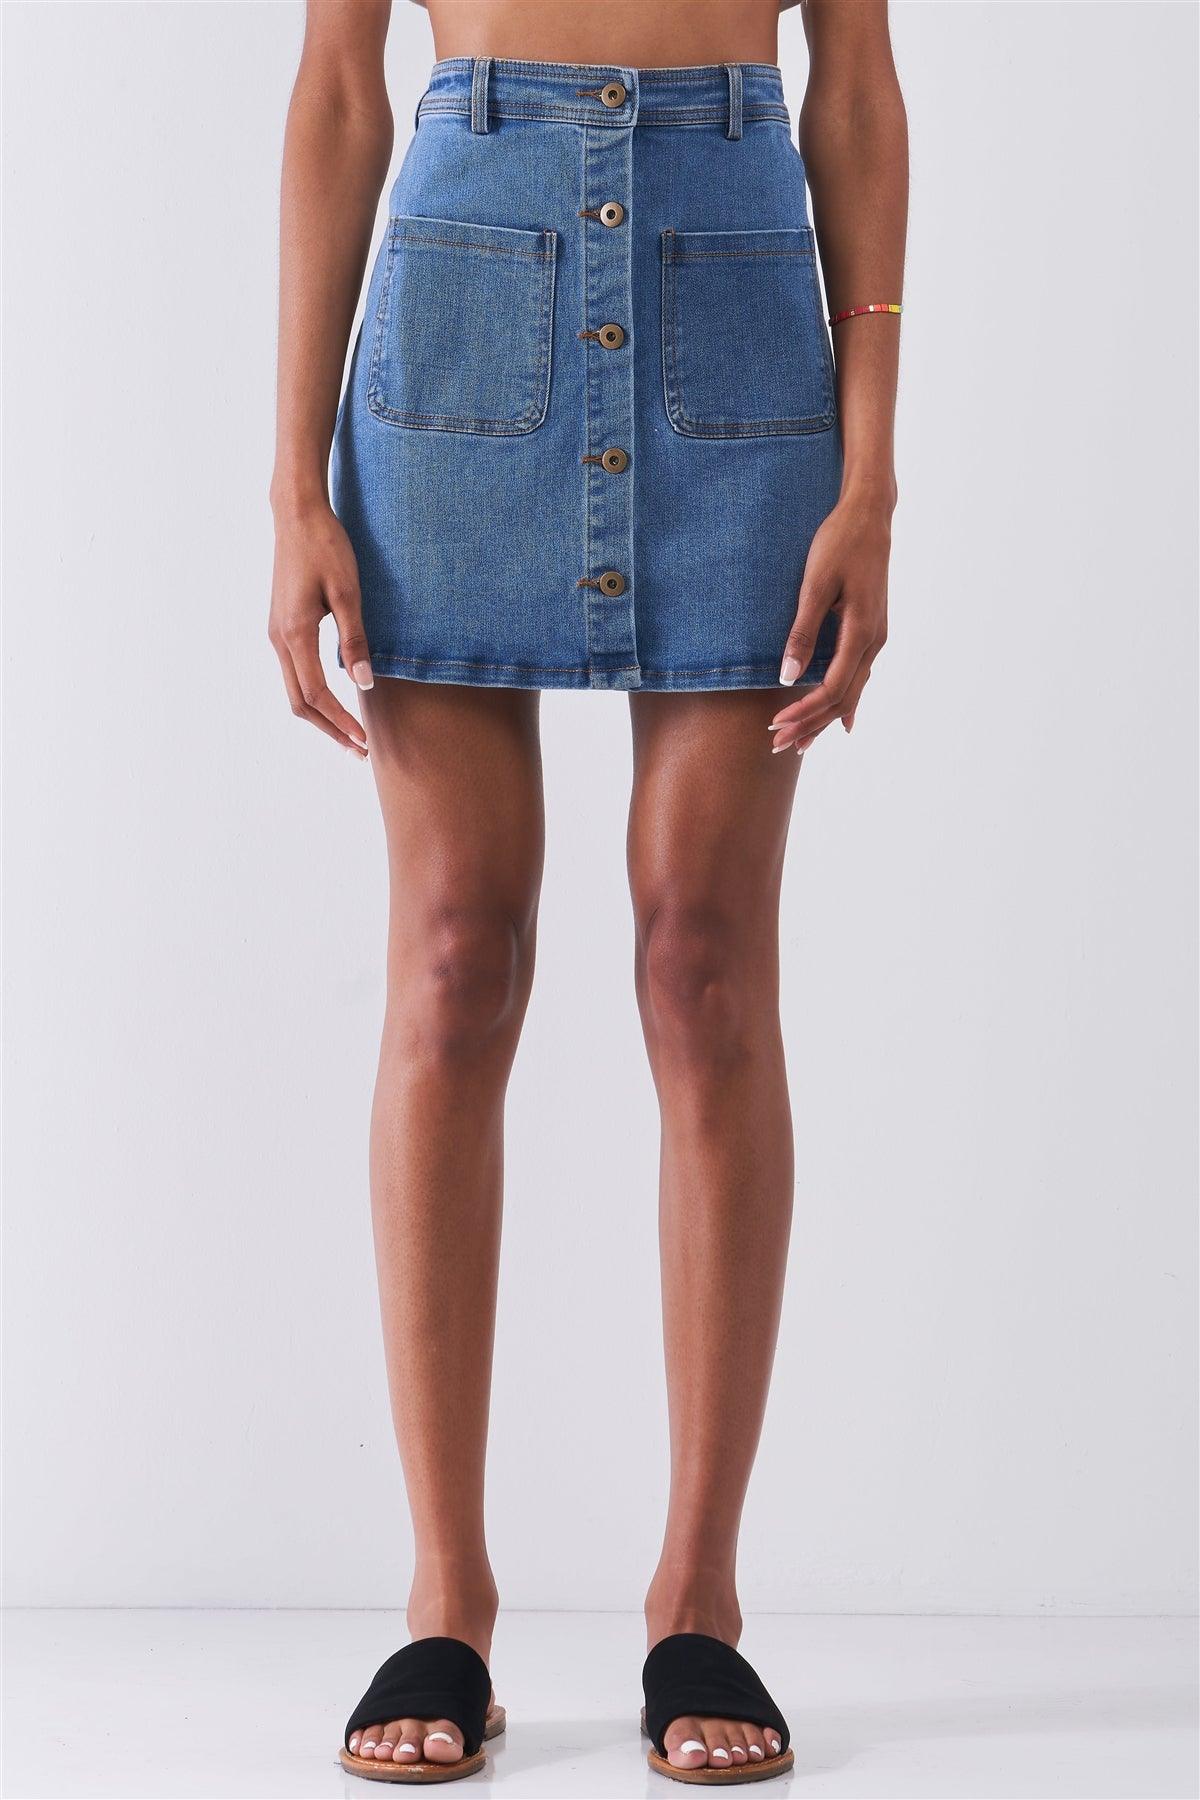 OG Vintage Blue Denim High Waist Button-Down Two Front Pockets Detail Mini Skirt /1-2-2-1